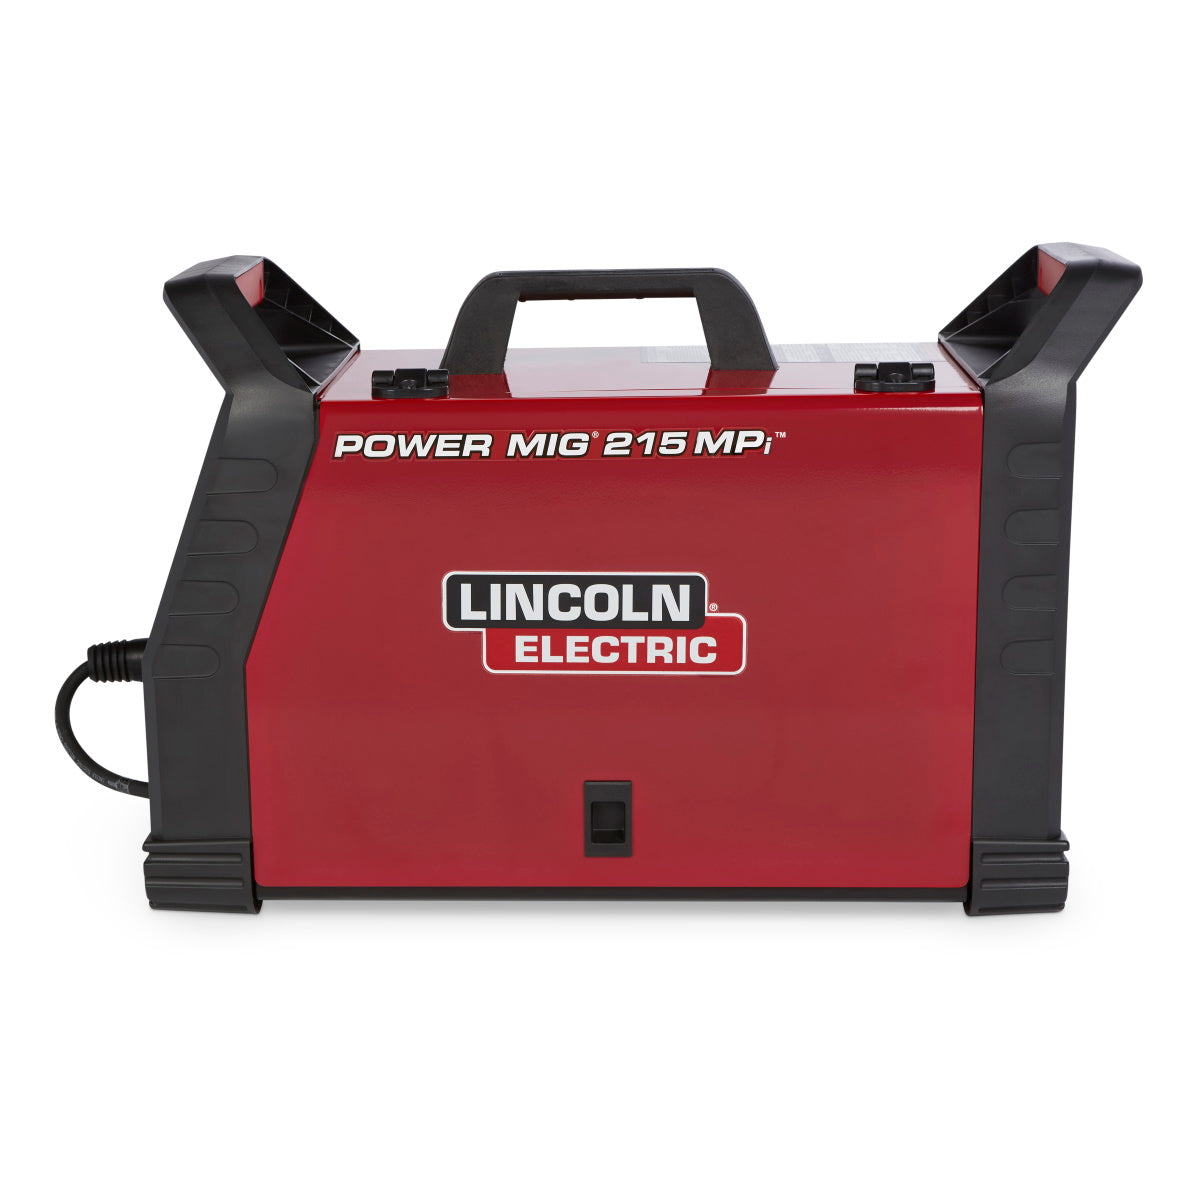 Lincoln Power MIG 215 MPi Multi Process Welder (K4876-1)